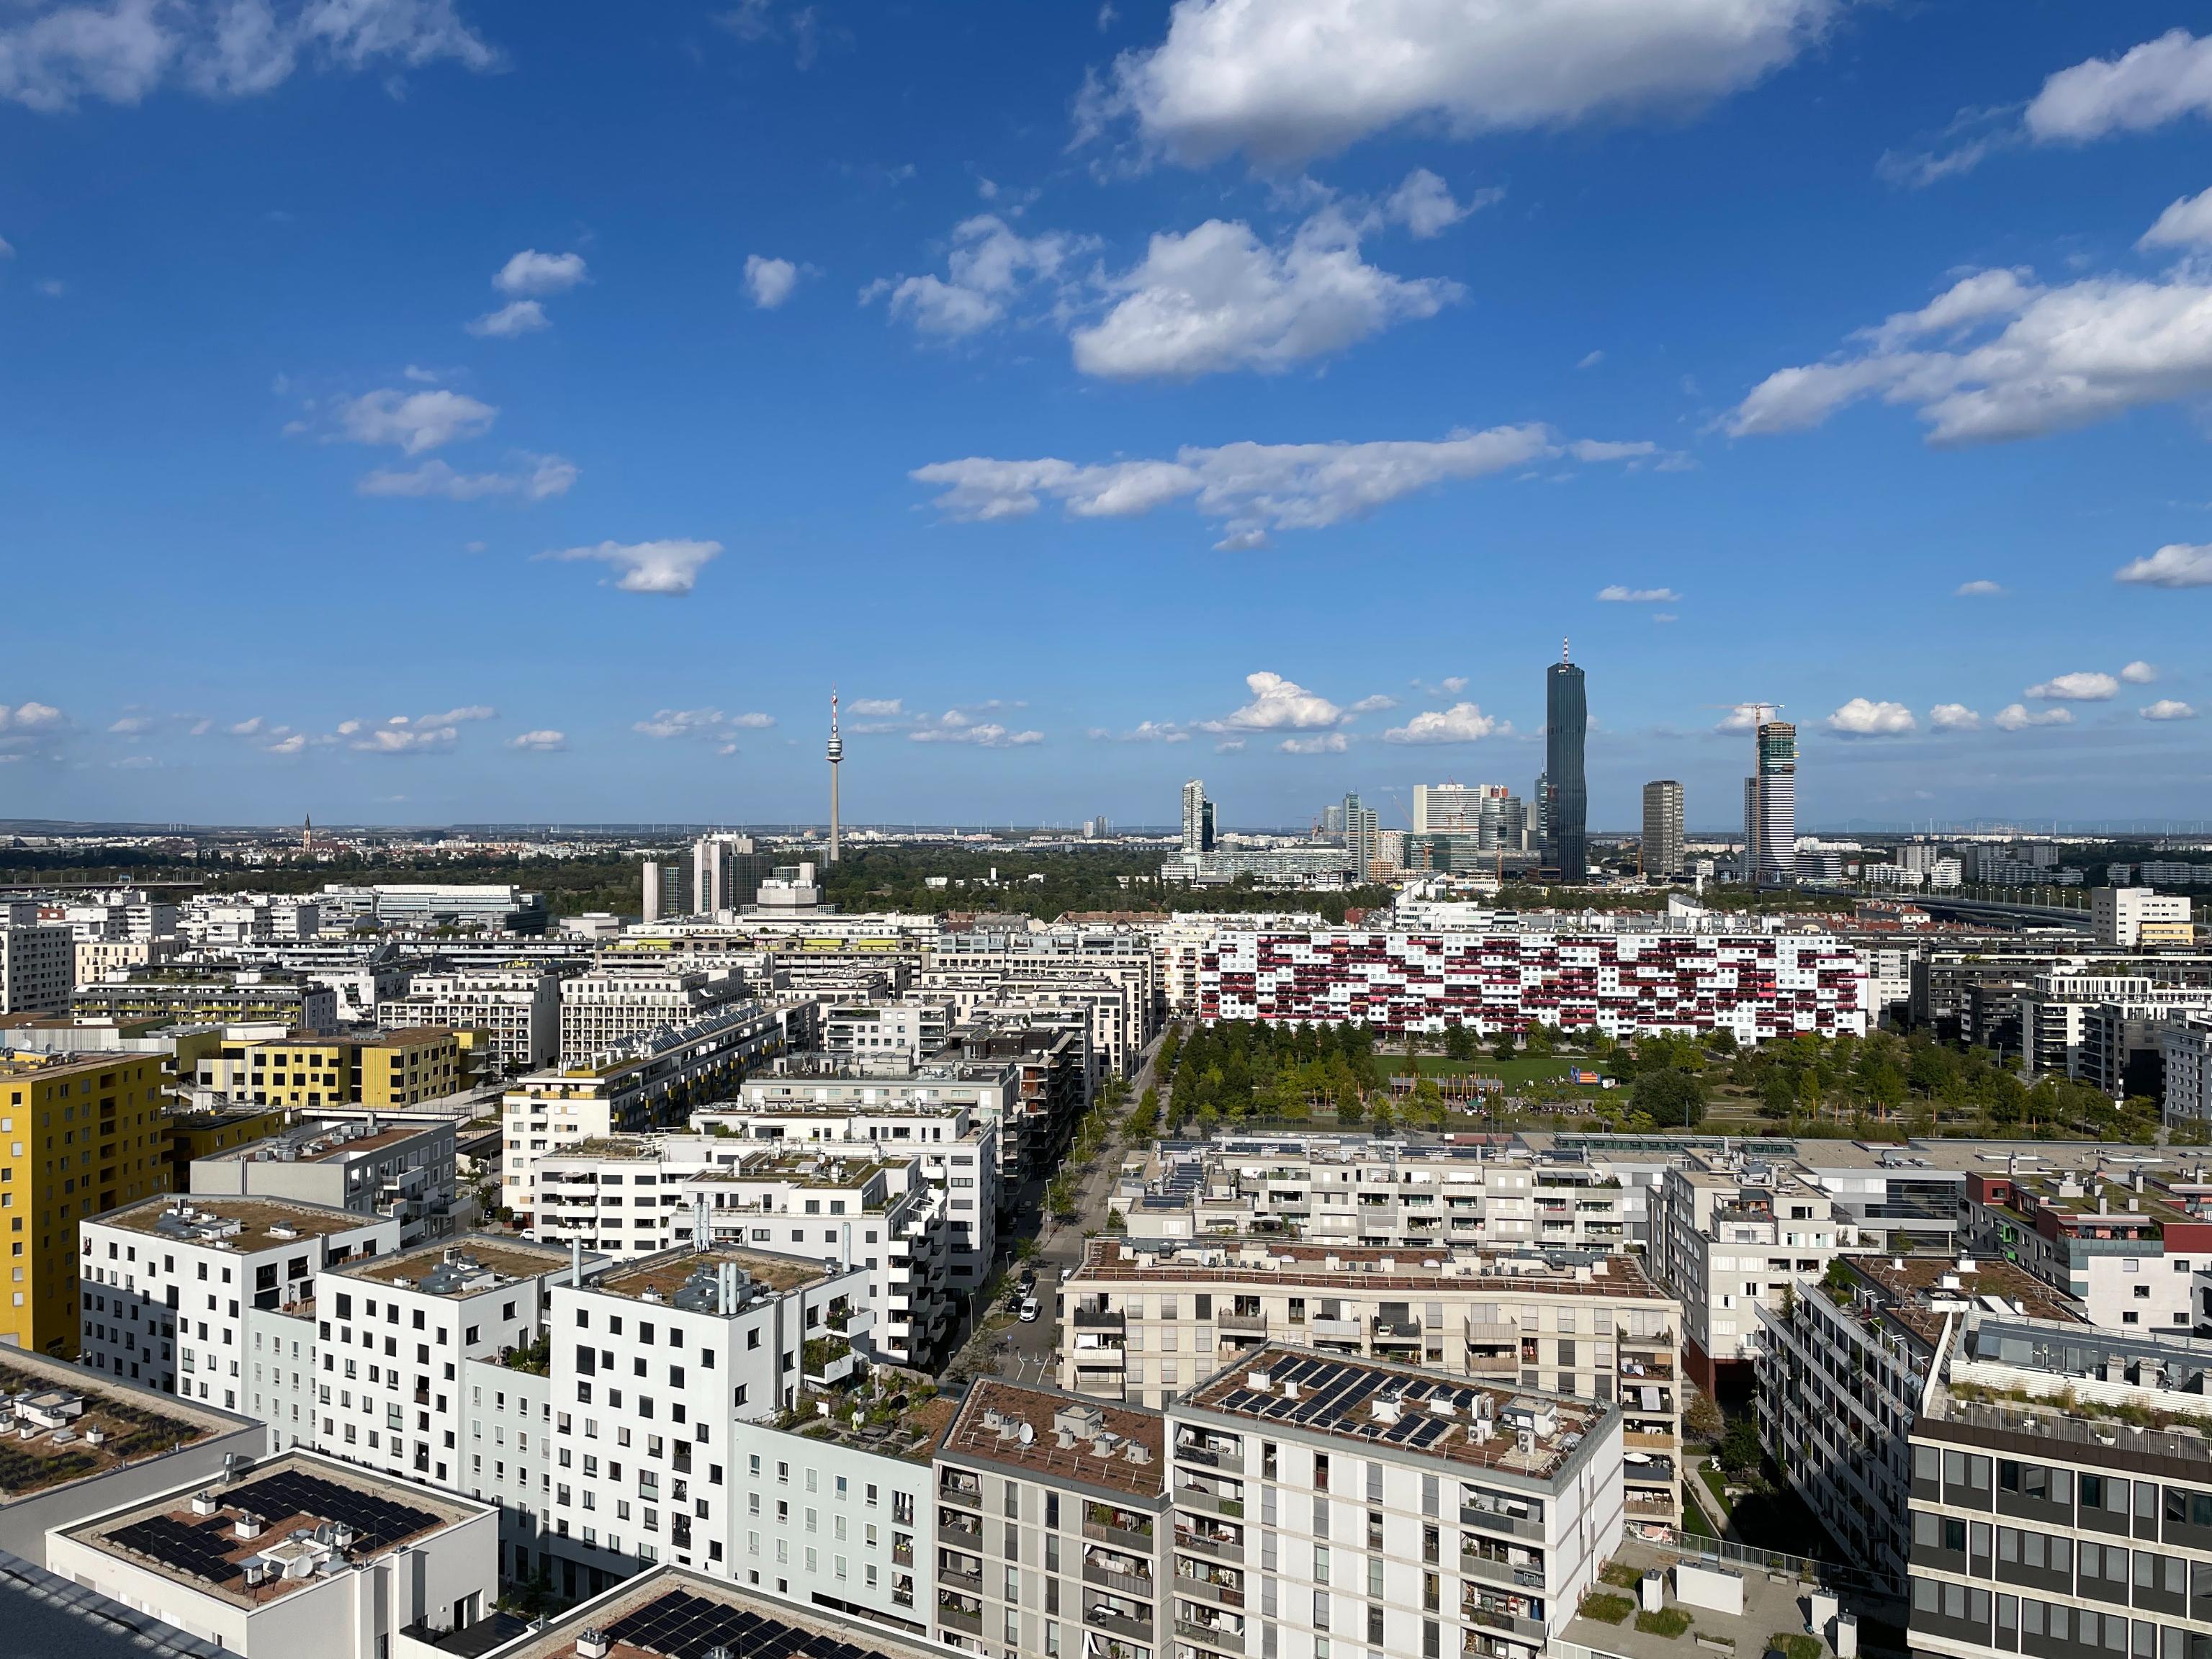 Nordbahnhof Wien, Rudolf Bednar Park, Donaucity, DC Tower, Donauturm